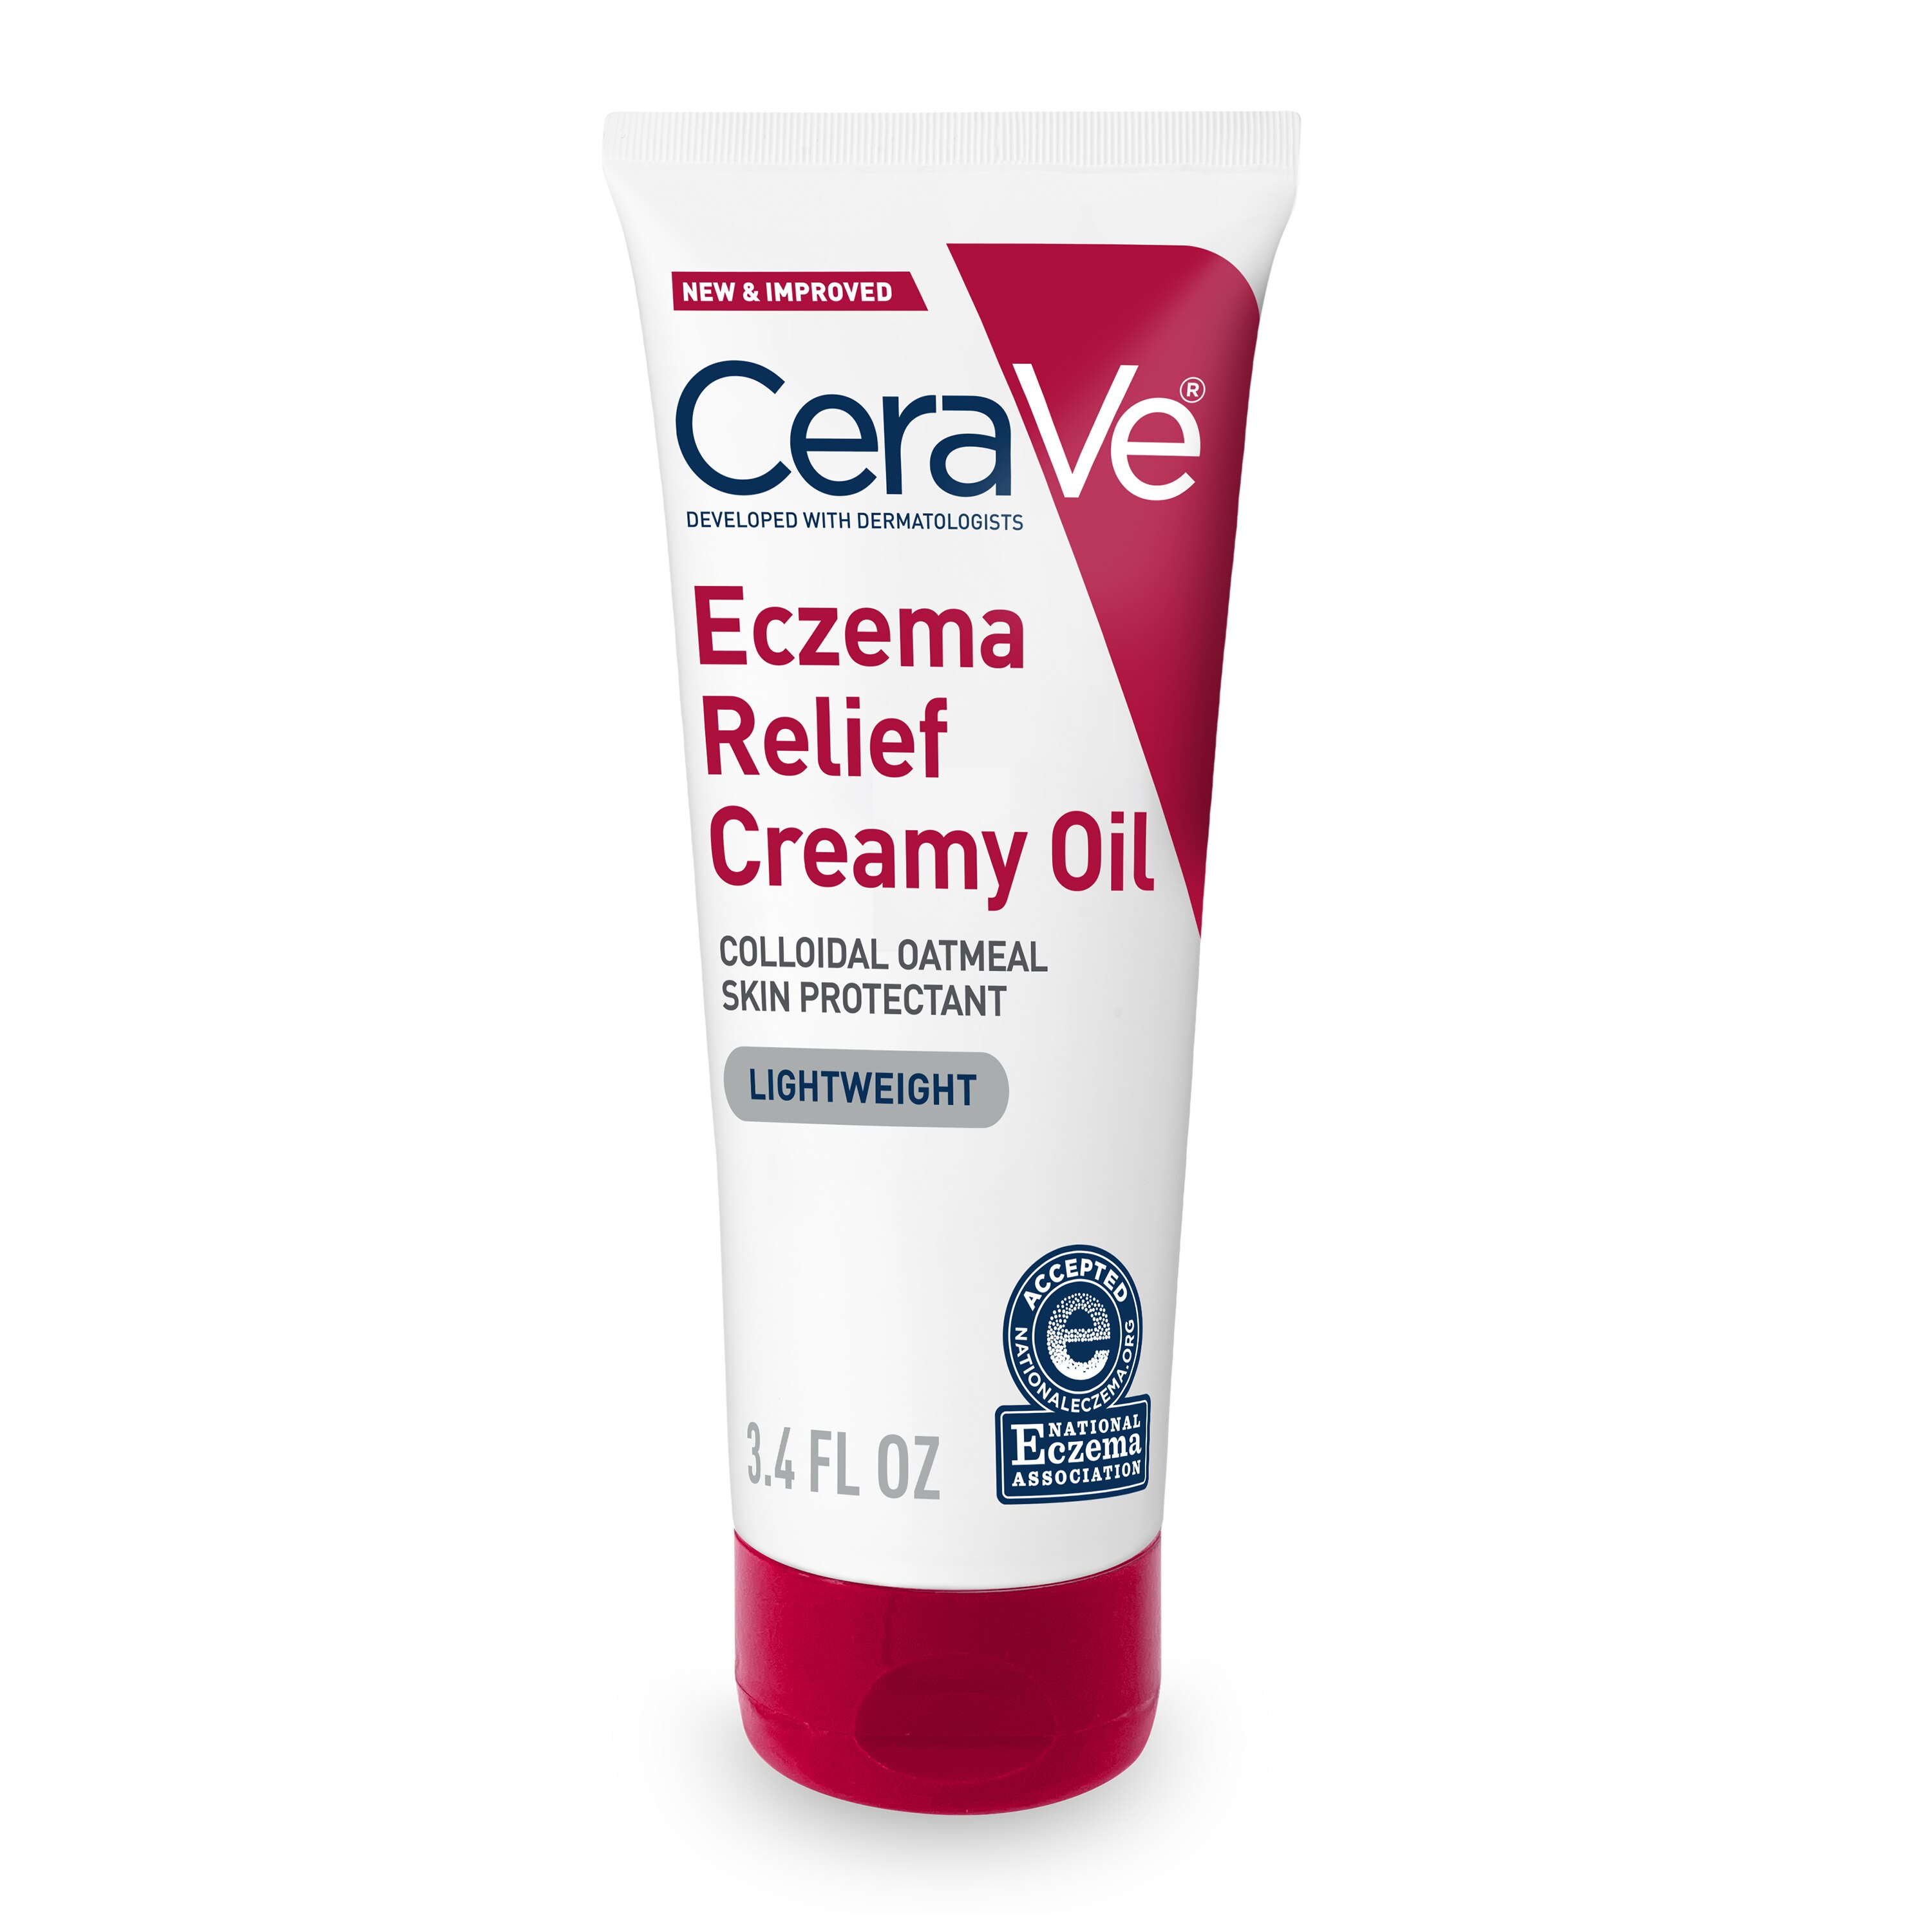 Cerave Eczema Relief Creamy Oil, Lightweight Body Moisturizing Lotion for Eczema Skin with Colloidal Oatmeal, 3.4 oz | CVS